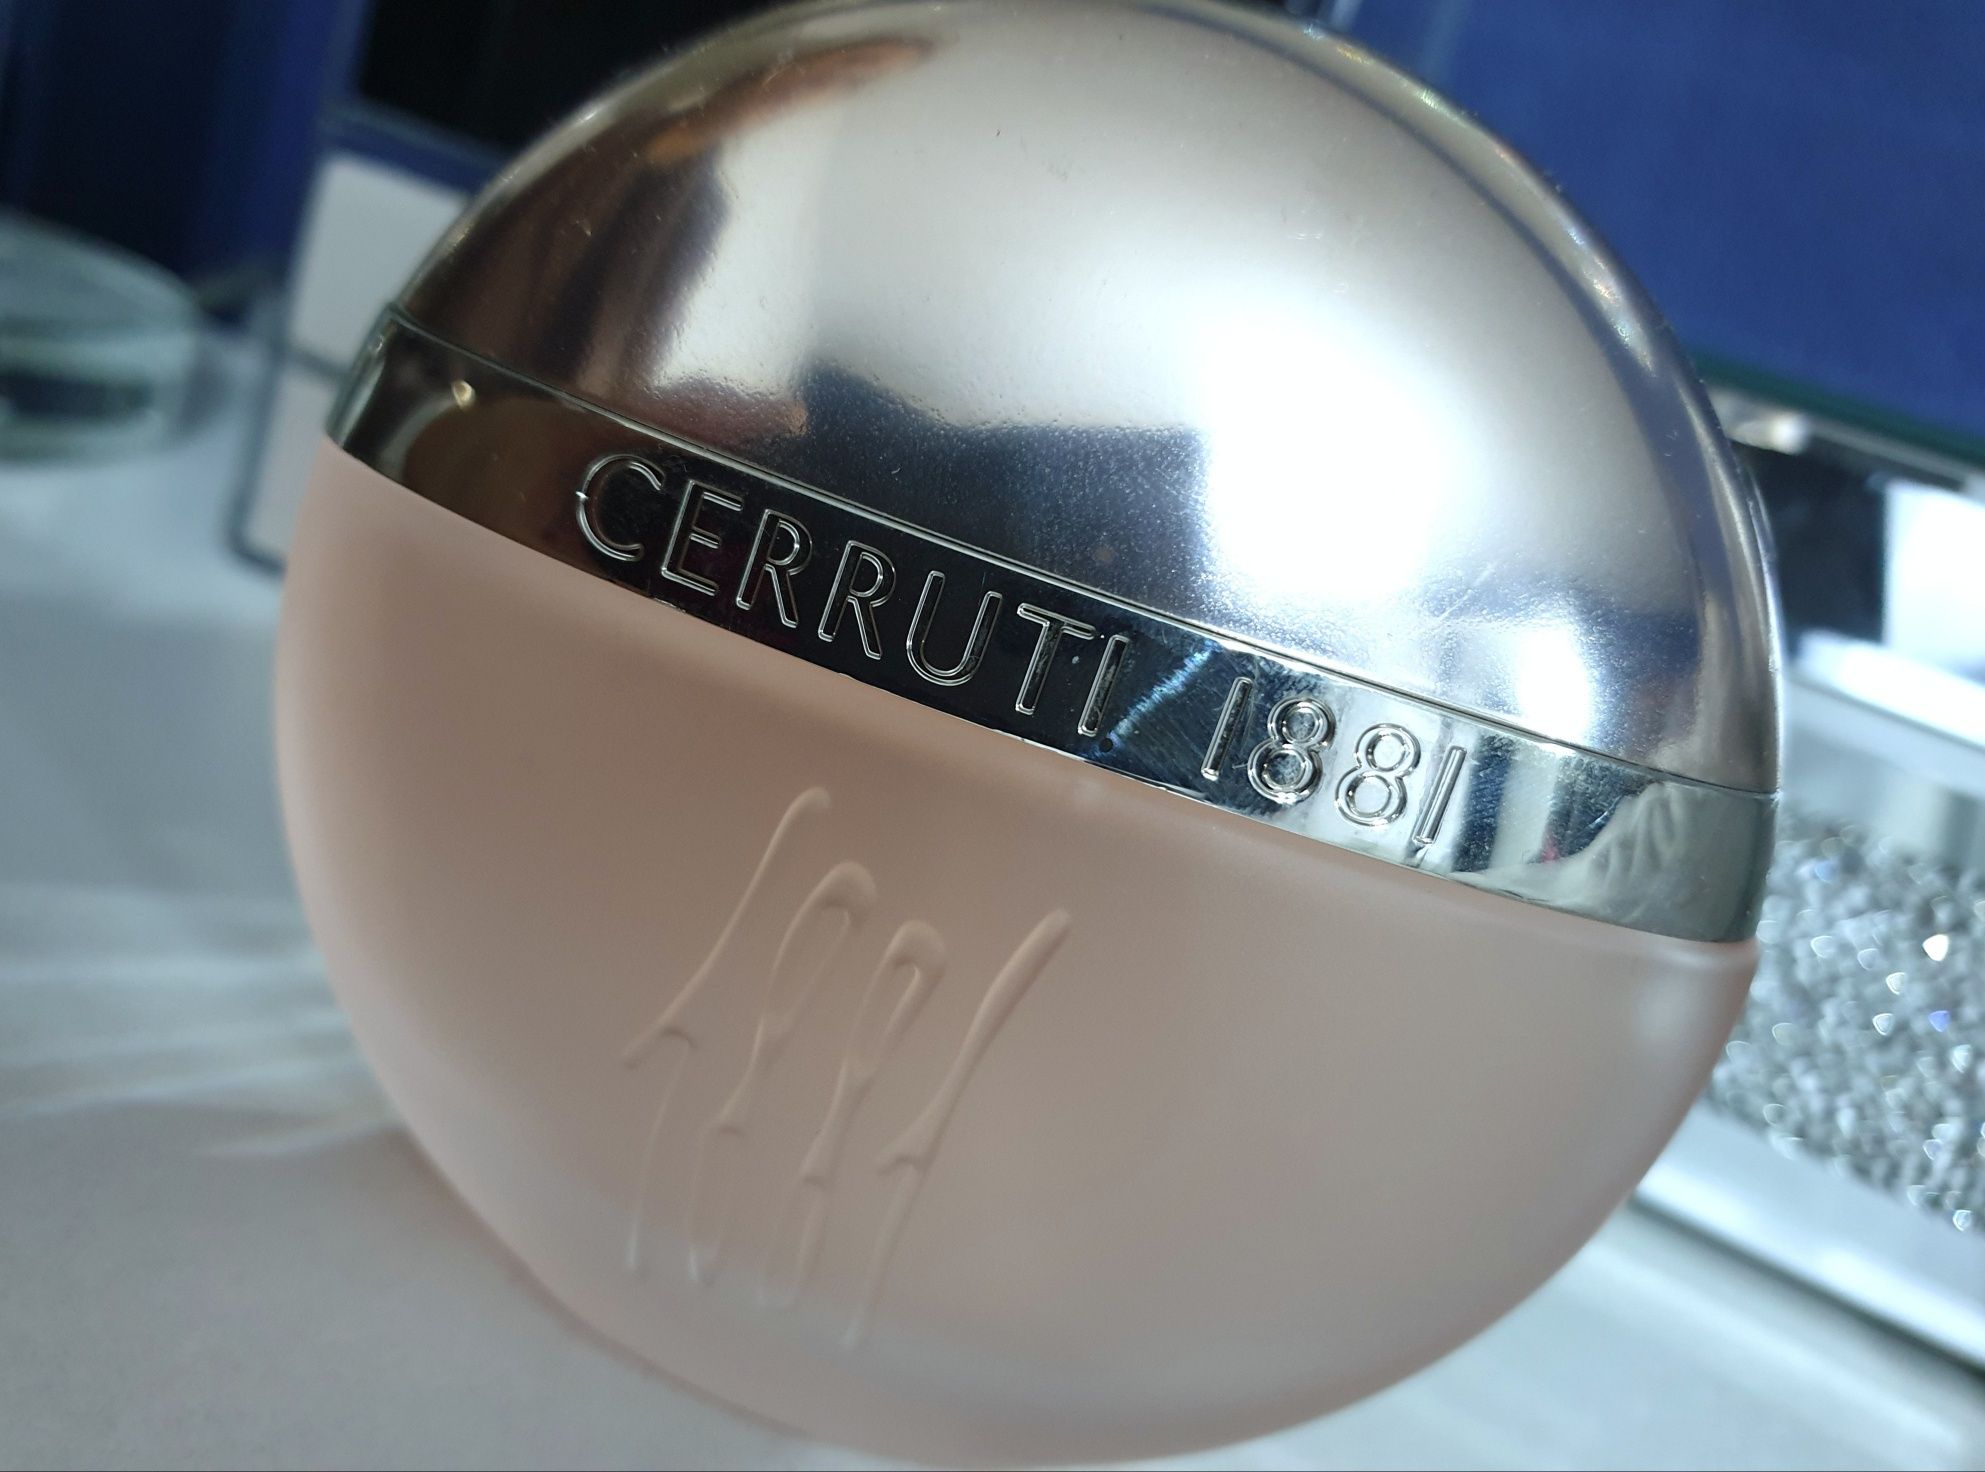 Cerruti 1881 perfumy 100ml